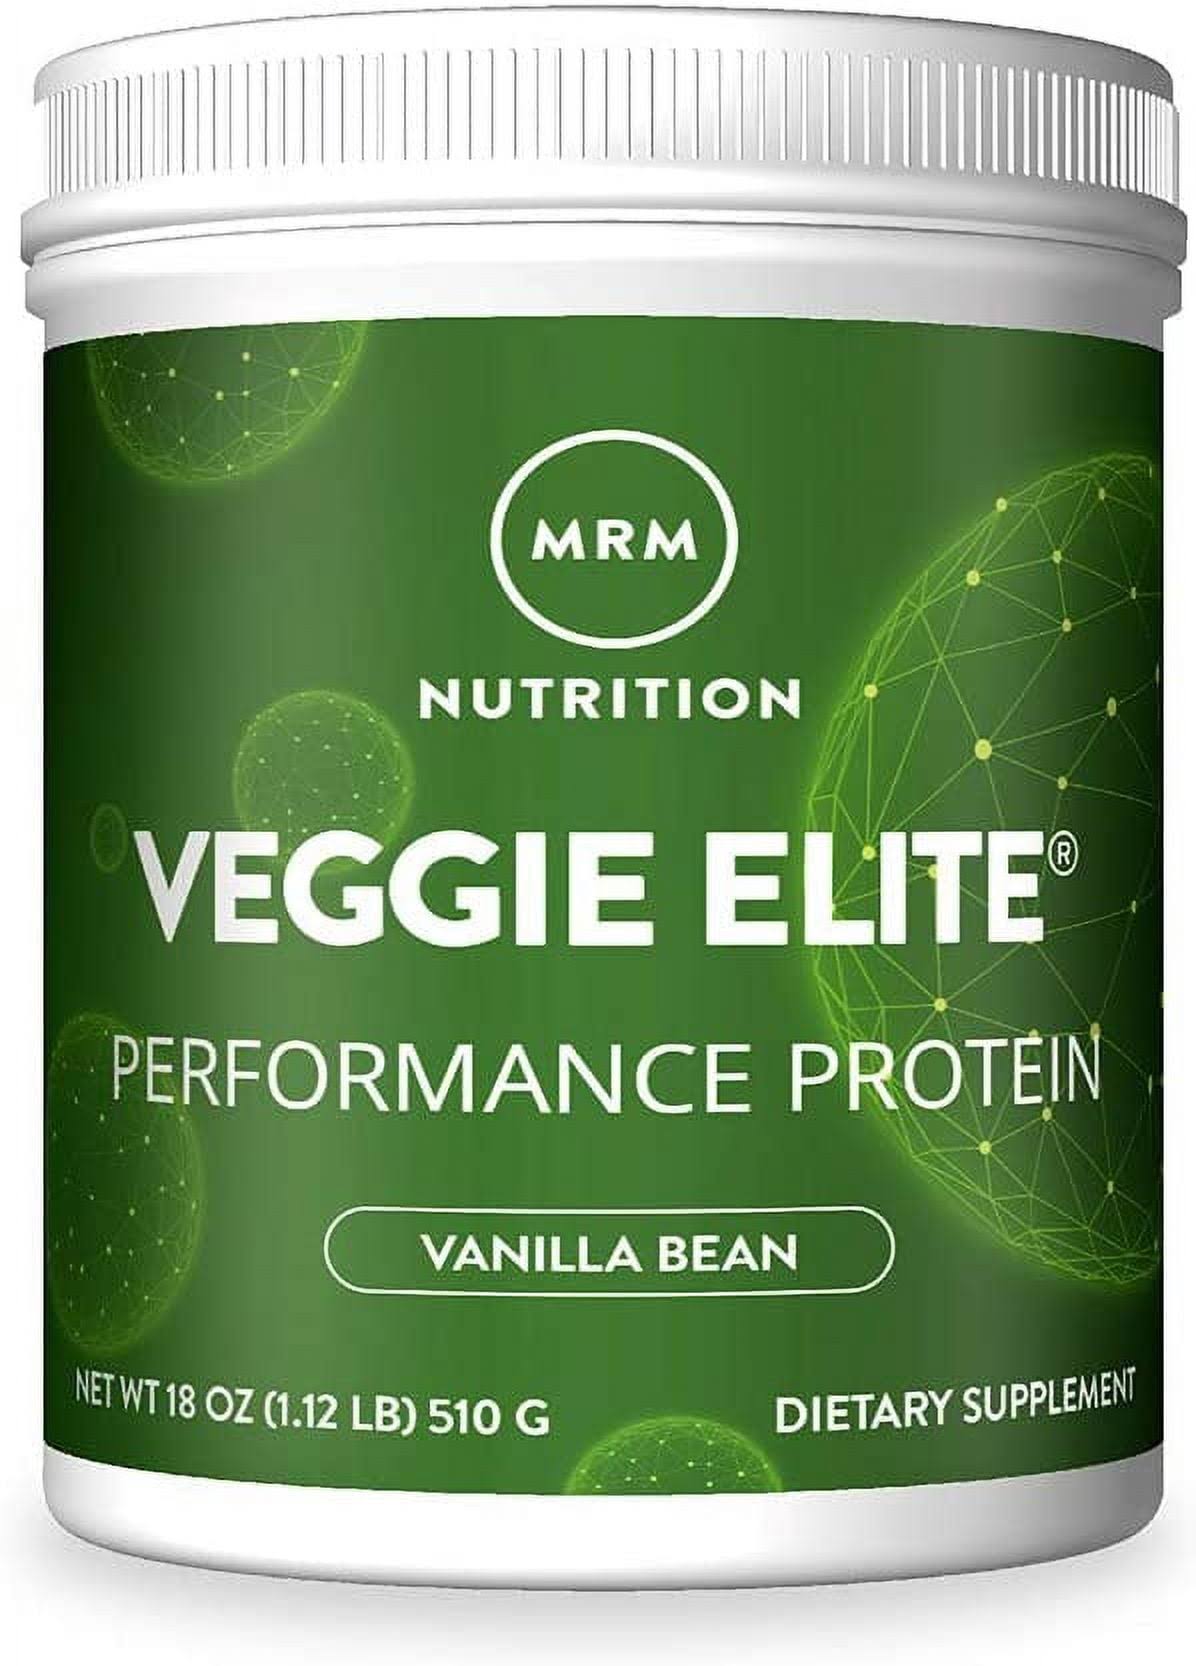 MRM Veggie Elite Dietary Supplement - Vanilla Bean, 1.12lbs